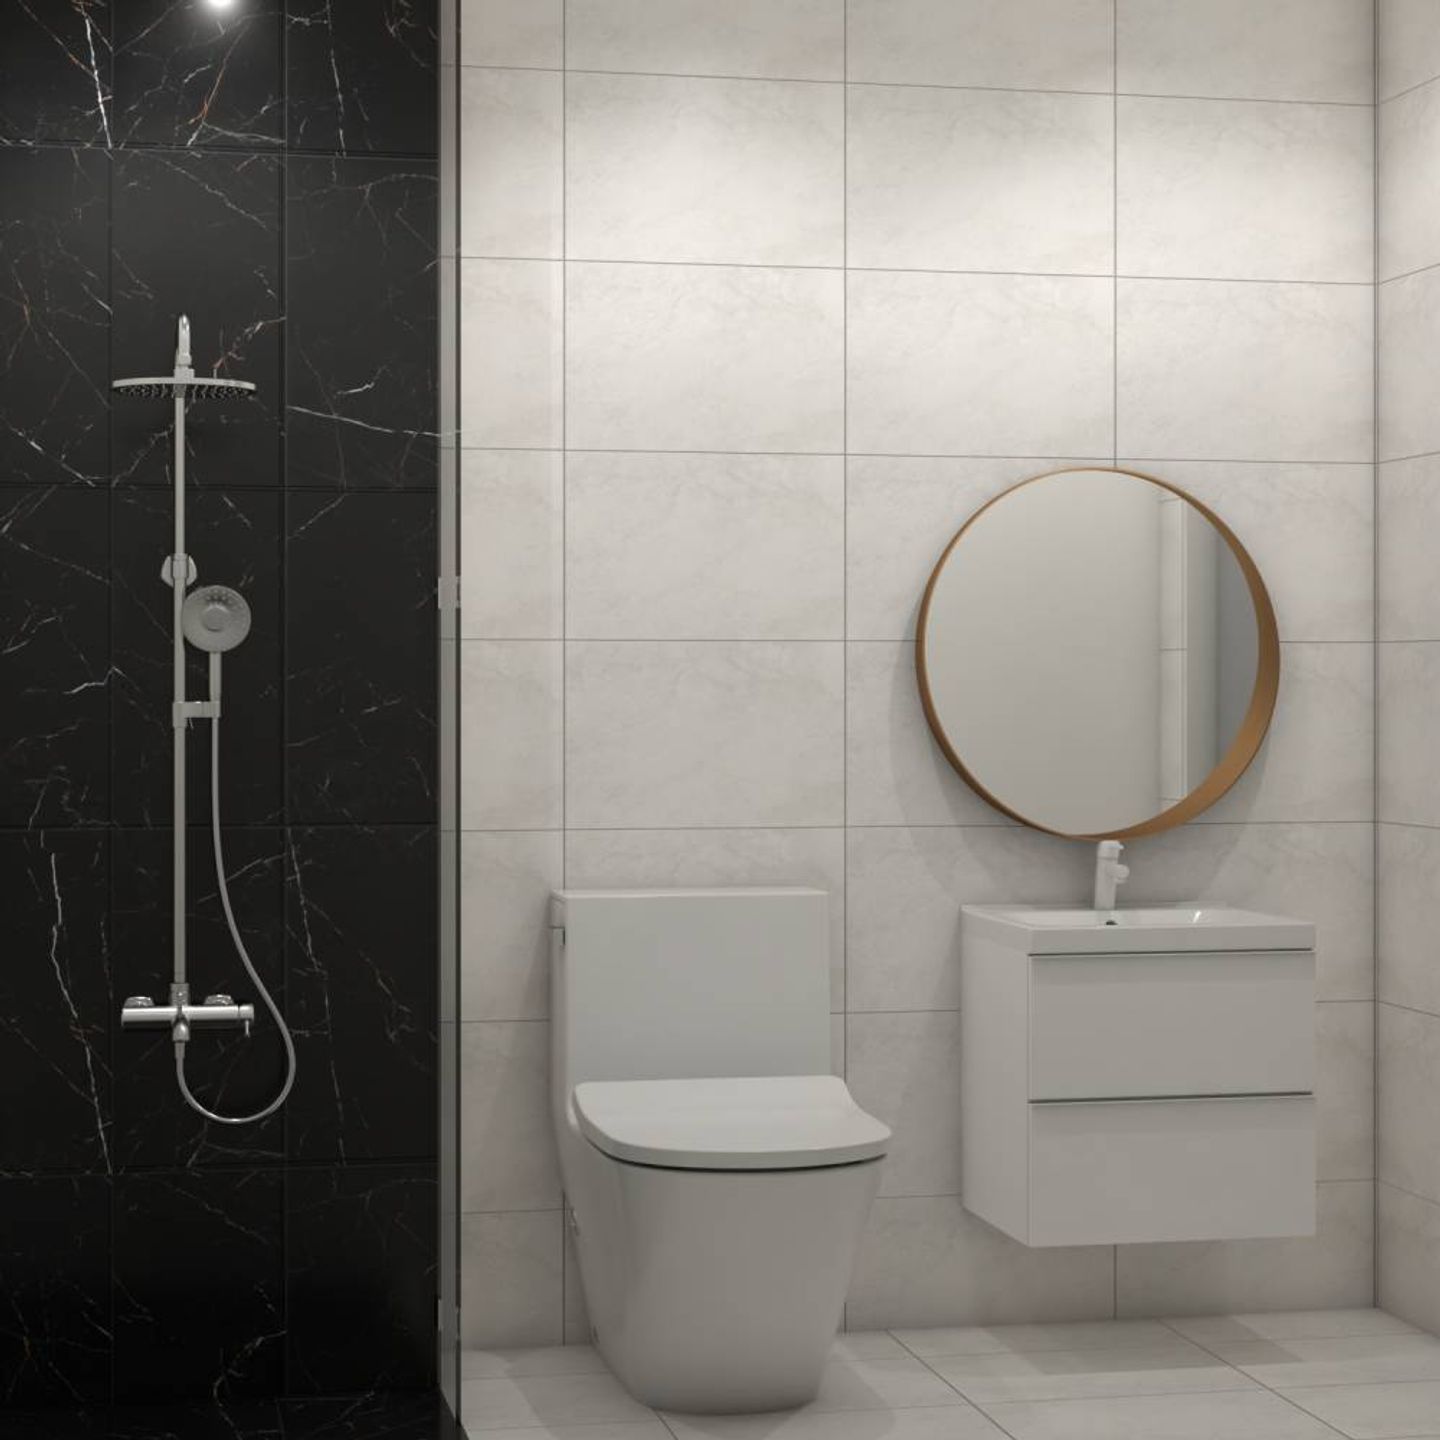 Black And White Bathroom Design With White Vanity Unit - Livspace